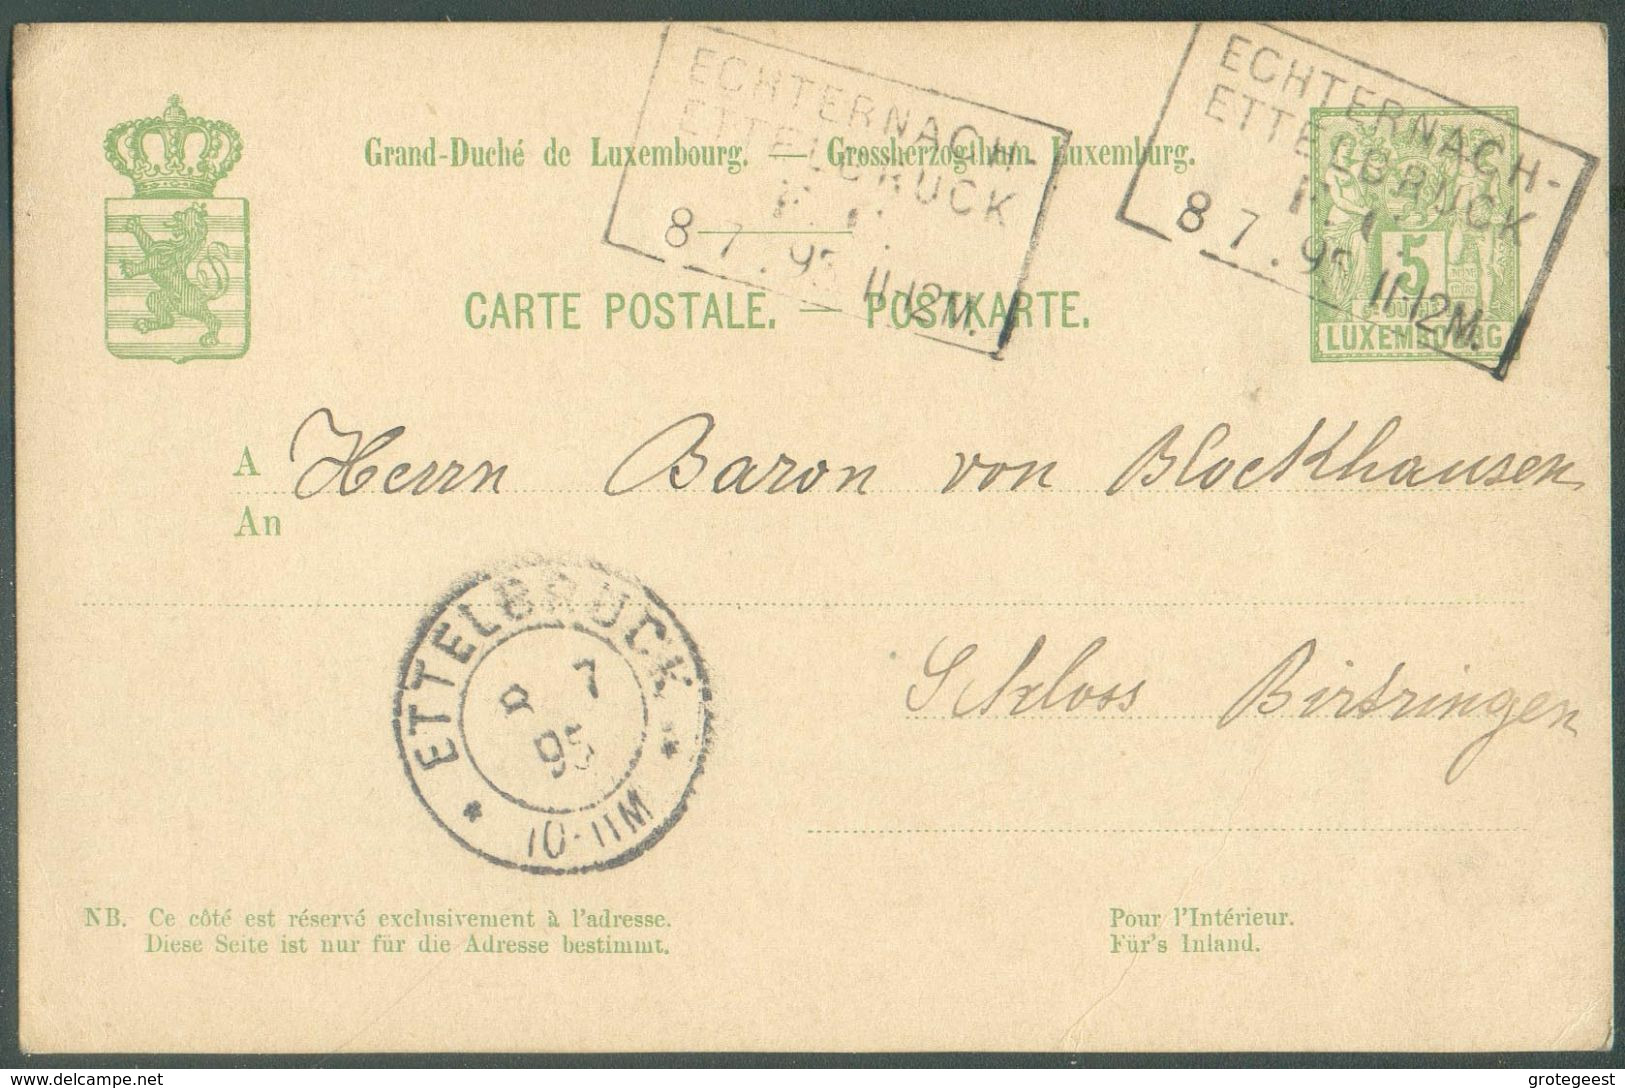 E.P. Carte 5 Centimes Obl. Griffe AMBULANT ECHTERNACH-ETTELBRUCK Du 8/07/1895 Vers Birtrange - 15988 - Postwaardestukken